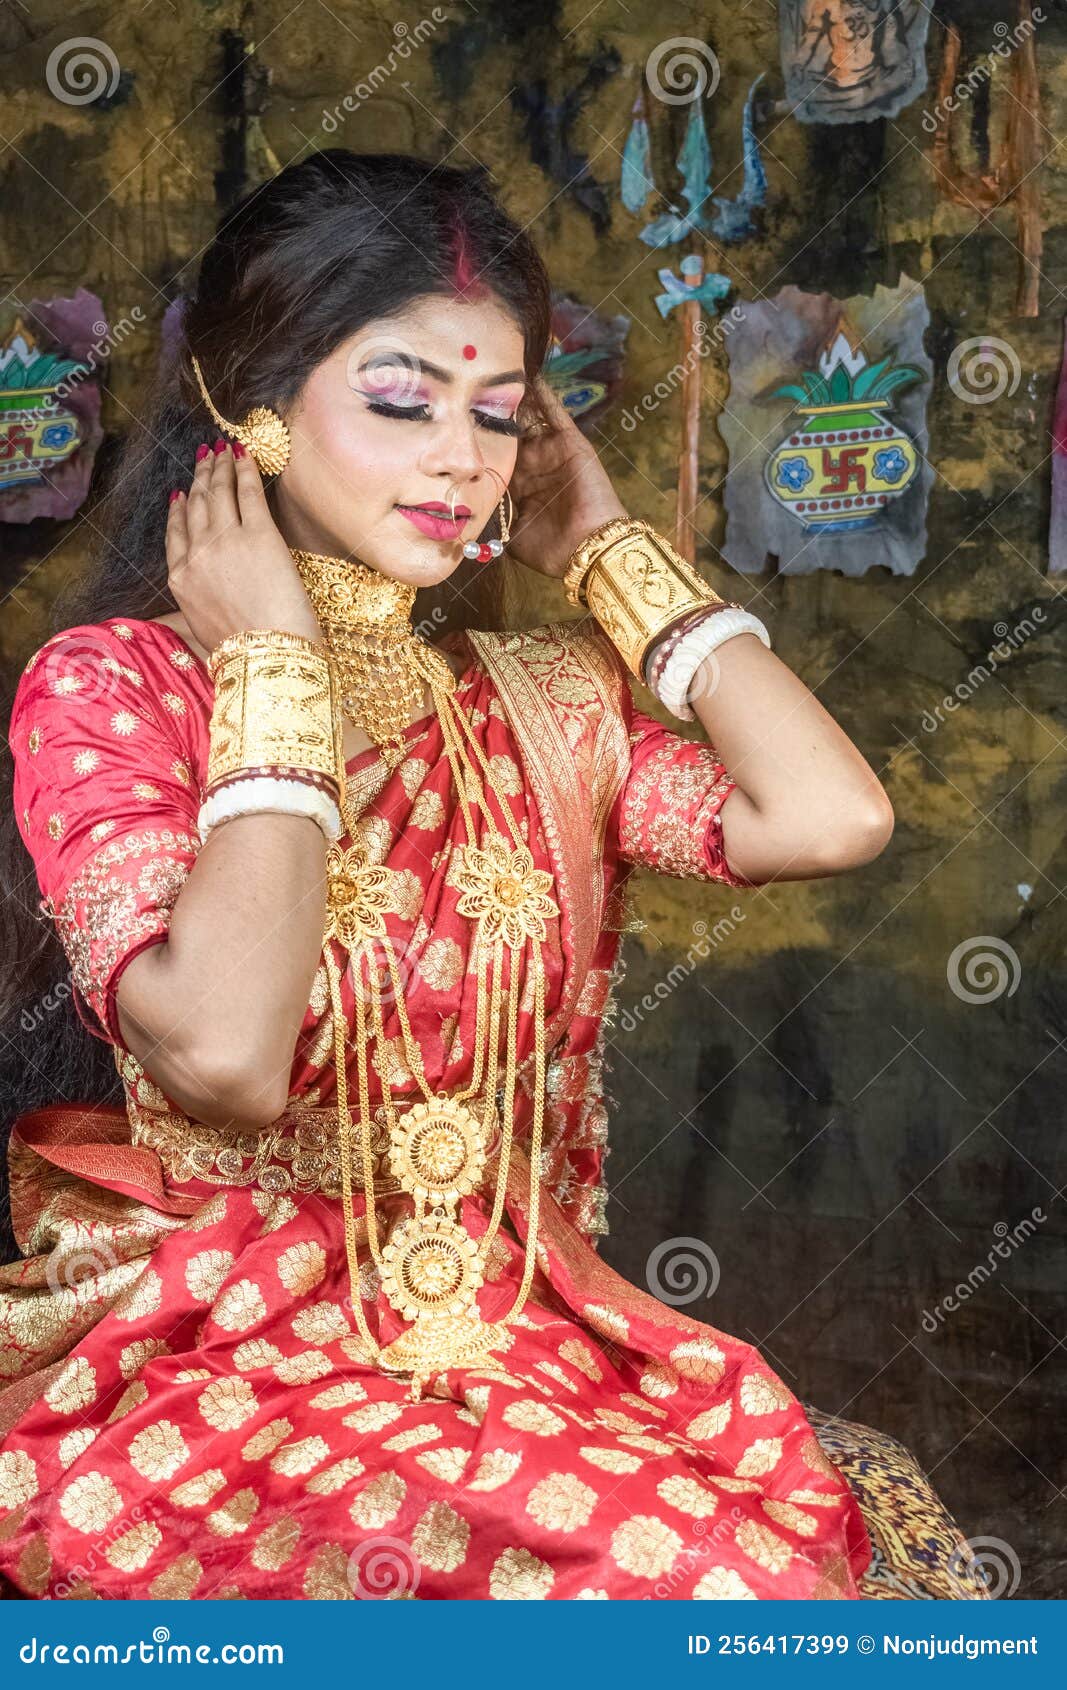 Traditional Self portrait ideas | Anshika Soni | Photoshoot ideas | diwali  photoshoot ideas | Girl photography poses, Teen photography poses, Indian  photoshoot